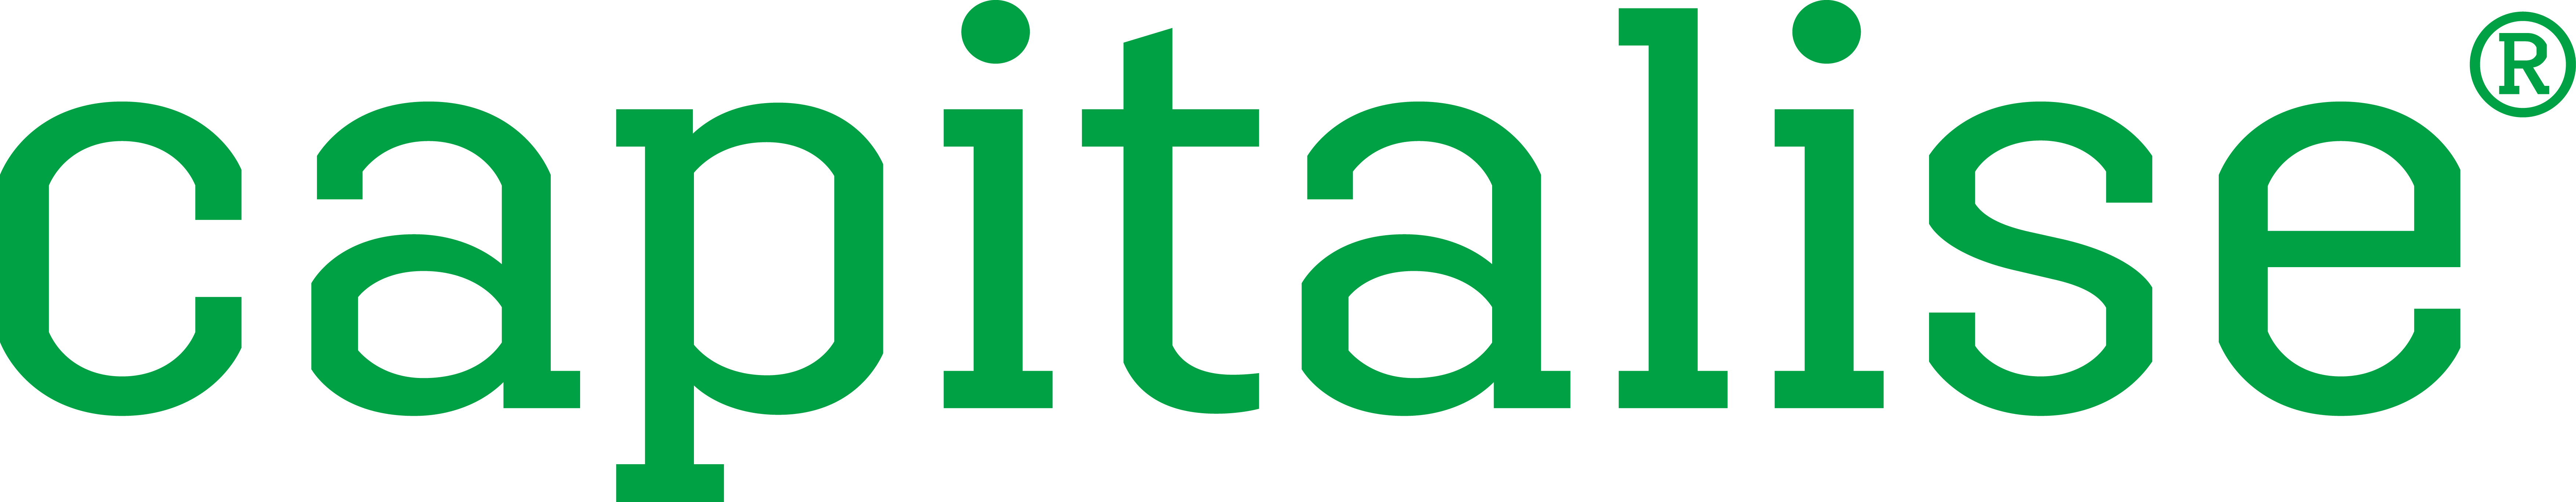 Capitalise full green horizontal logo